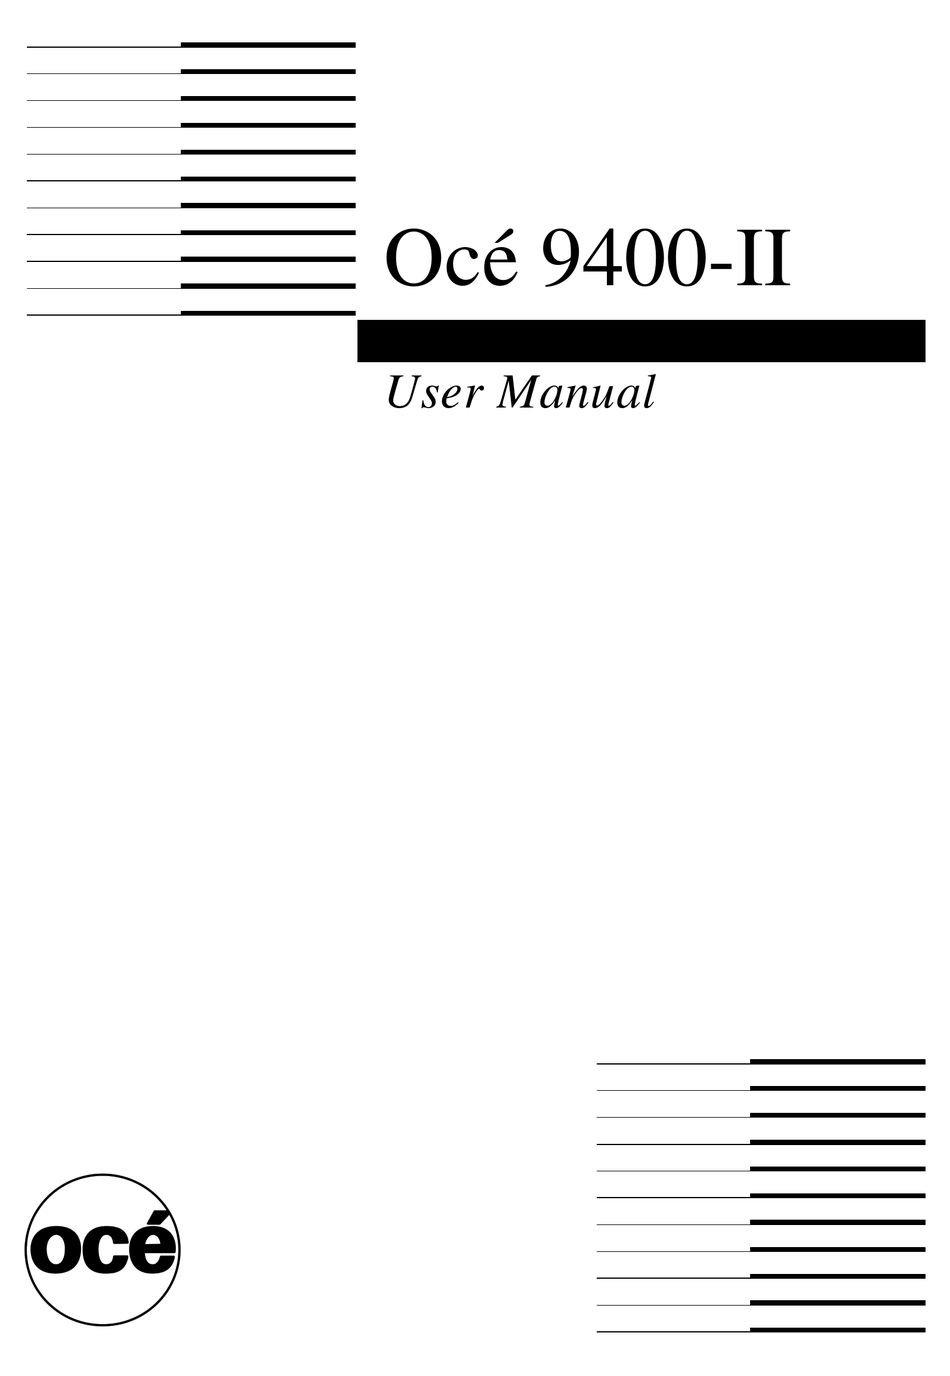 OCE 9400-II Wide Format Blueprint Plotter Printer Copier Scanner Paper Included 